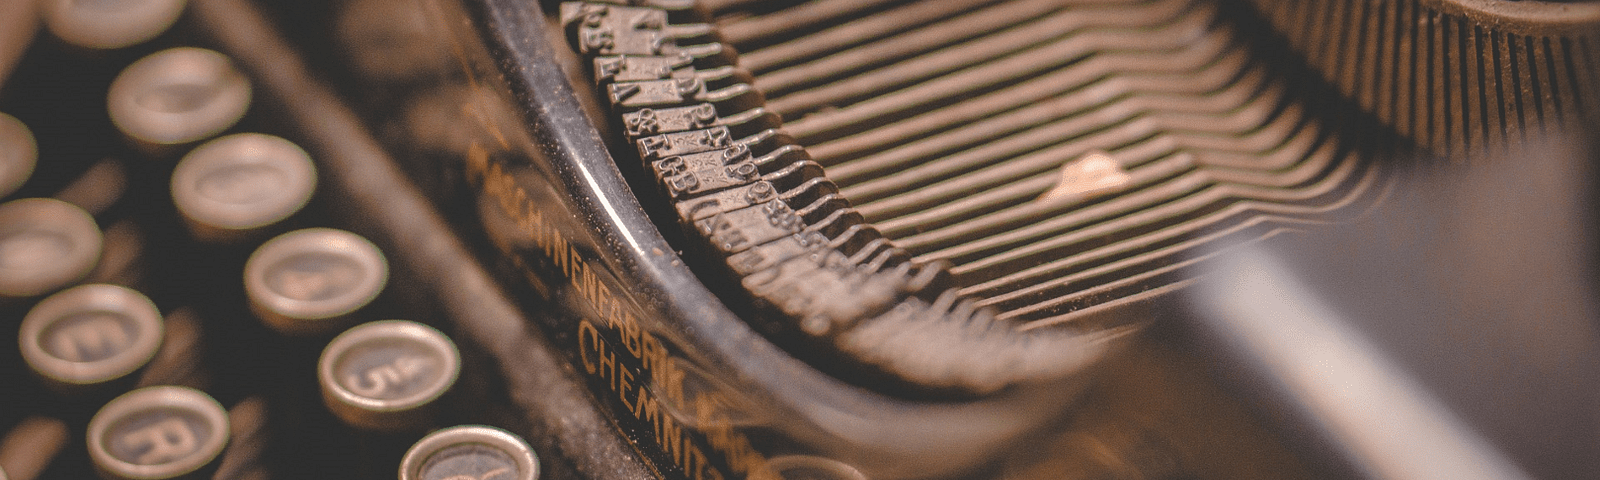 Vintage typewriter. Image credit: Iniesta44 on Pixabay.